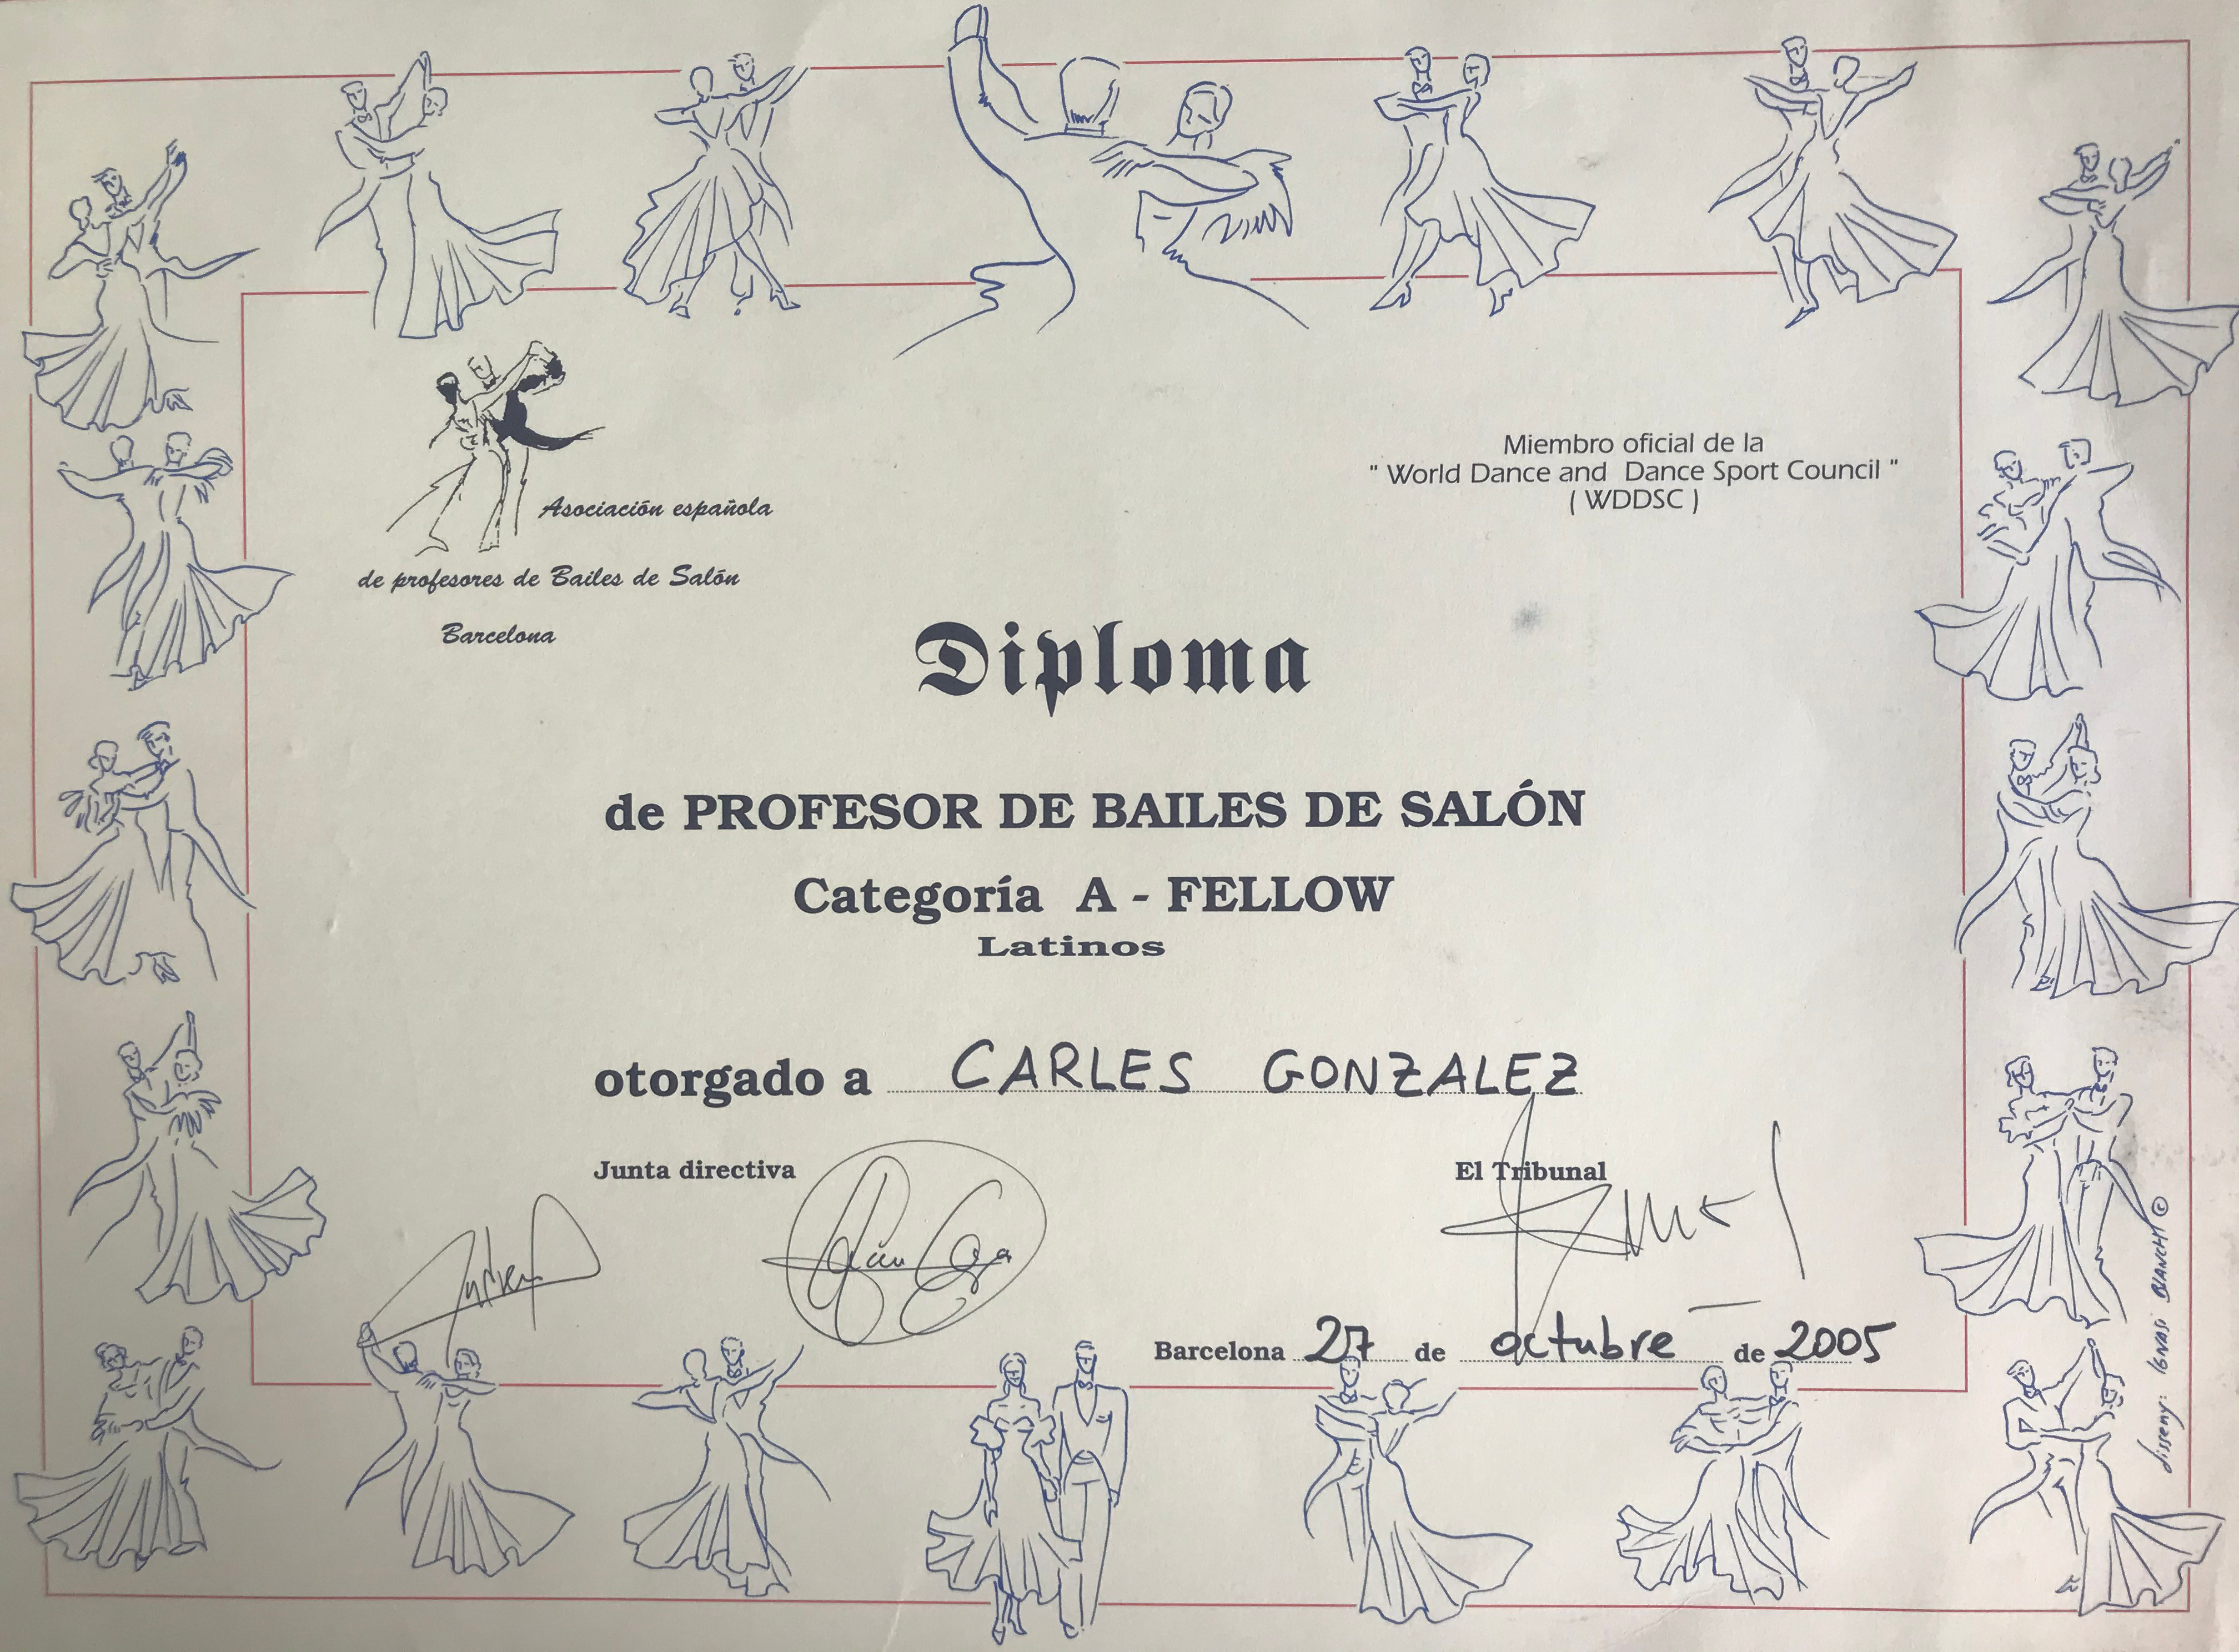 Título de Profesor de Bailes de Salón Fellow Latinos - Perfil personal de Carles González (Profesor, entrenador y formador de Baile)